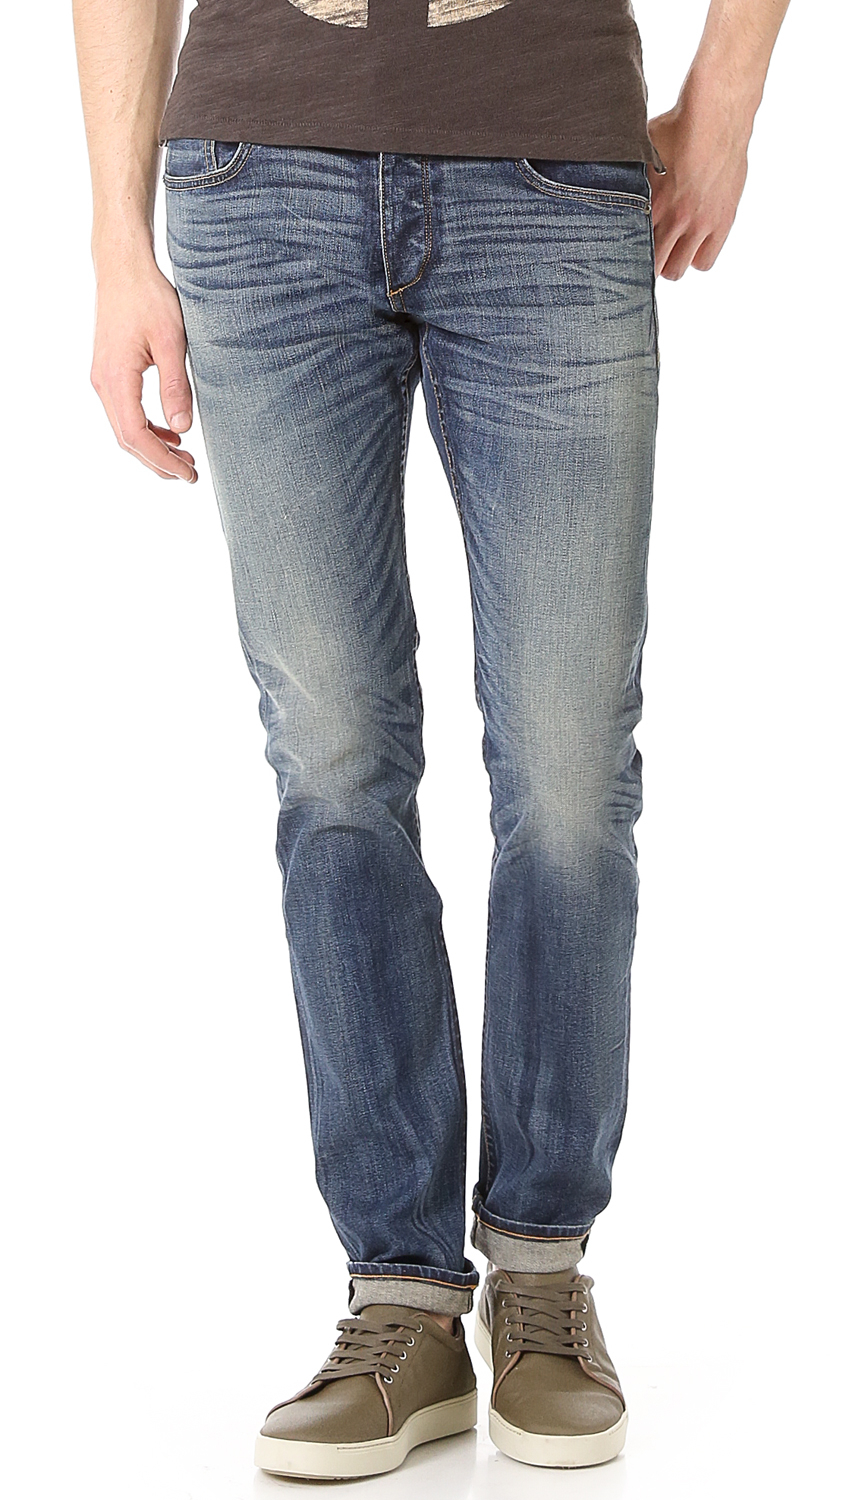 Lyst - Rag & Bone Standard Issue Fit 1 Slim-skinny Jeans in Blue for Men